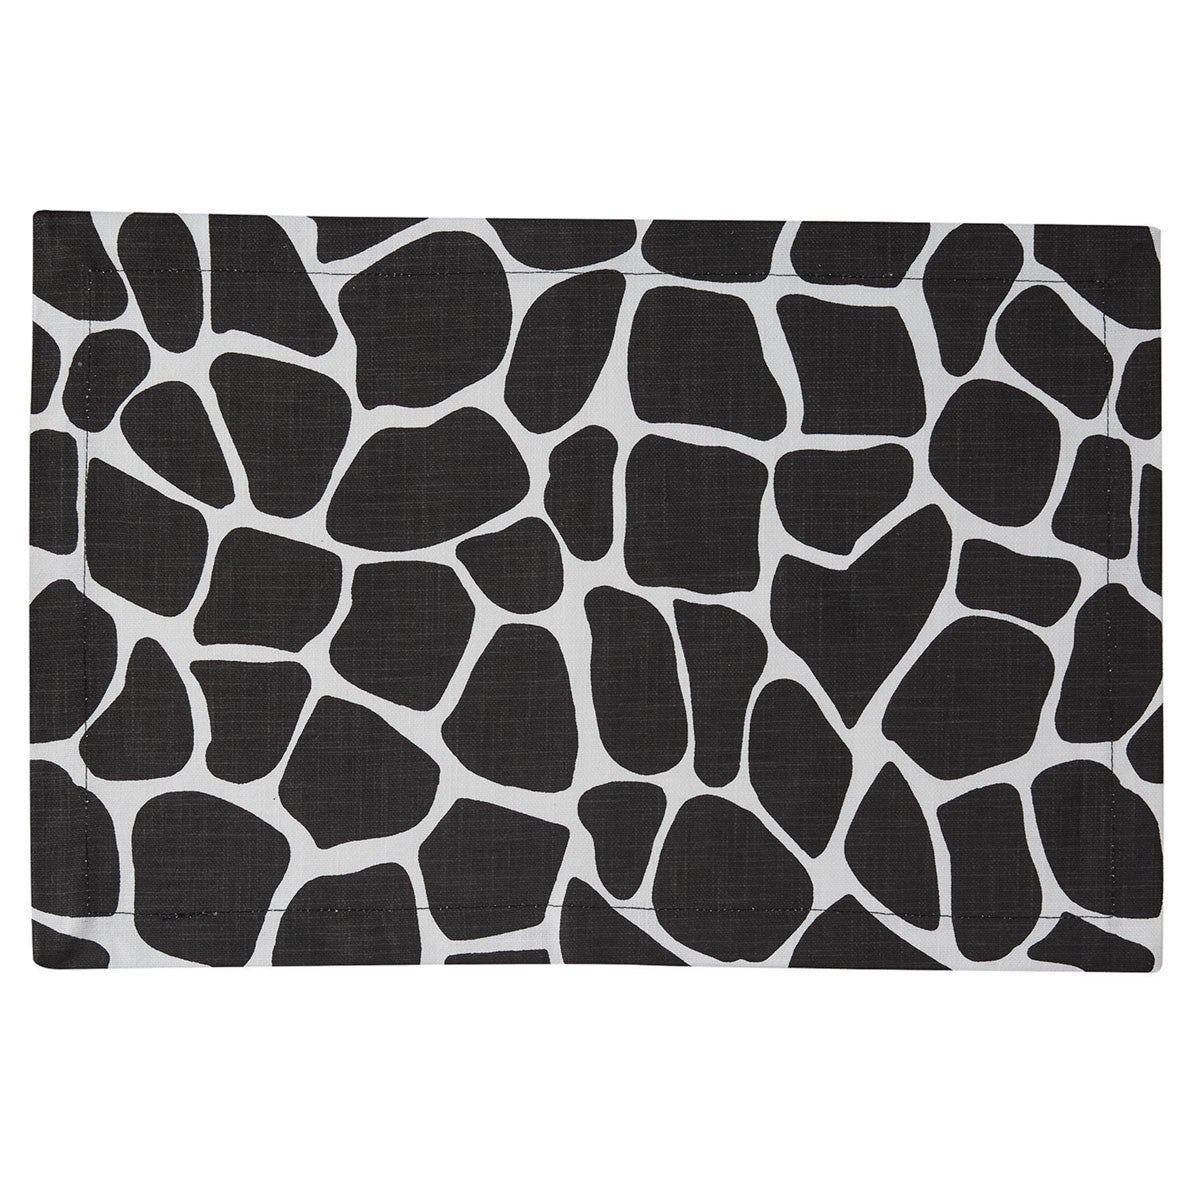 Giraffe Printed Placemat - Black Set of 4  Park Designs